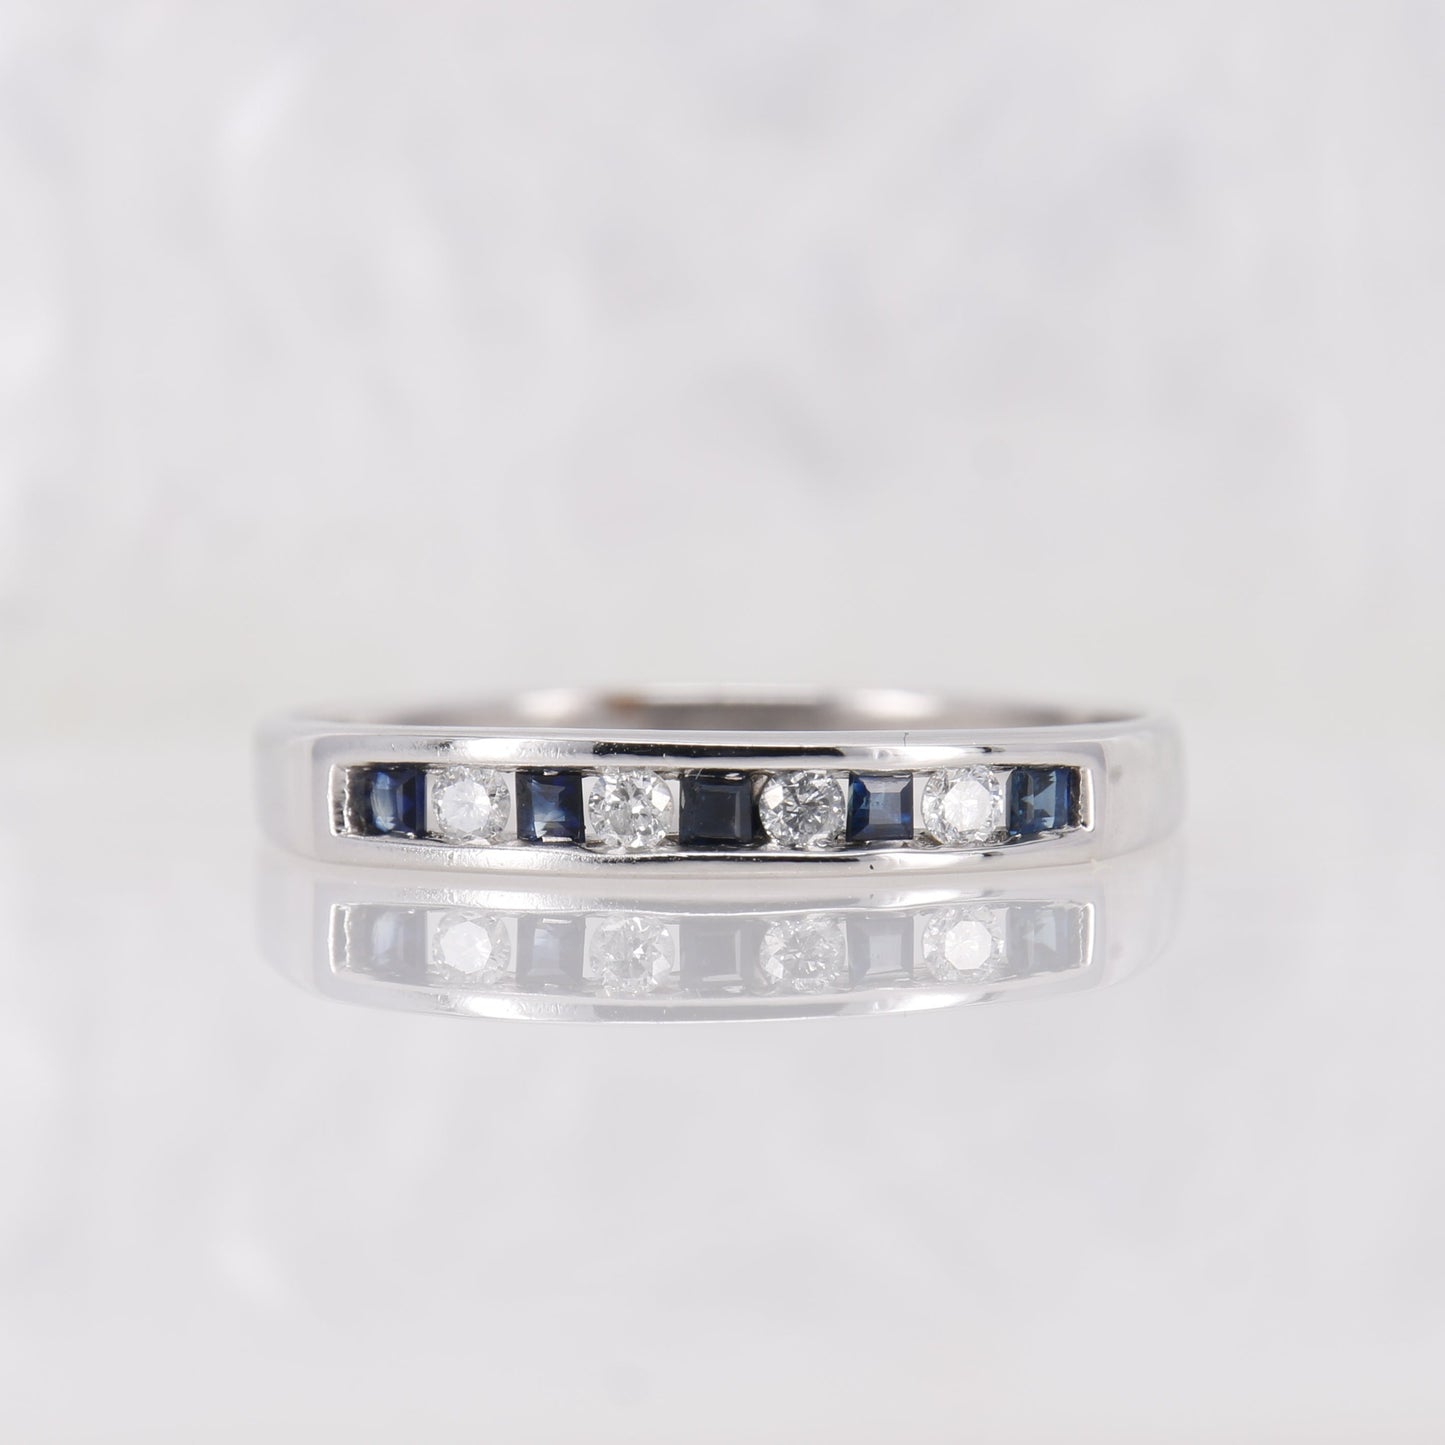 Vintage Secondhand Sapphire and Diamond Eternity Ring 9ct White Gold,9k Sapphire Diamond Wedding Band